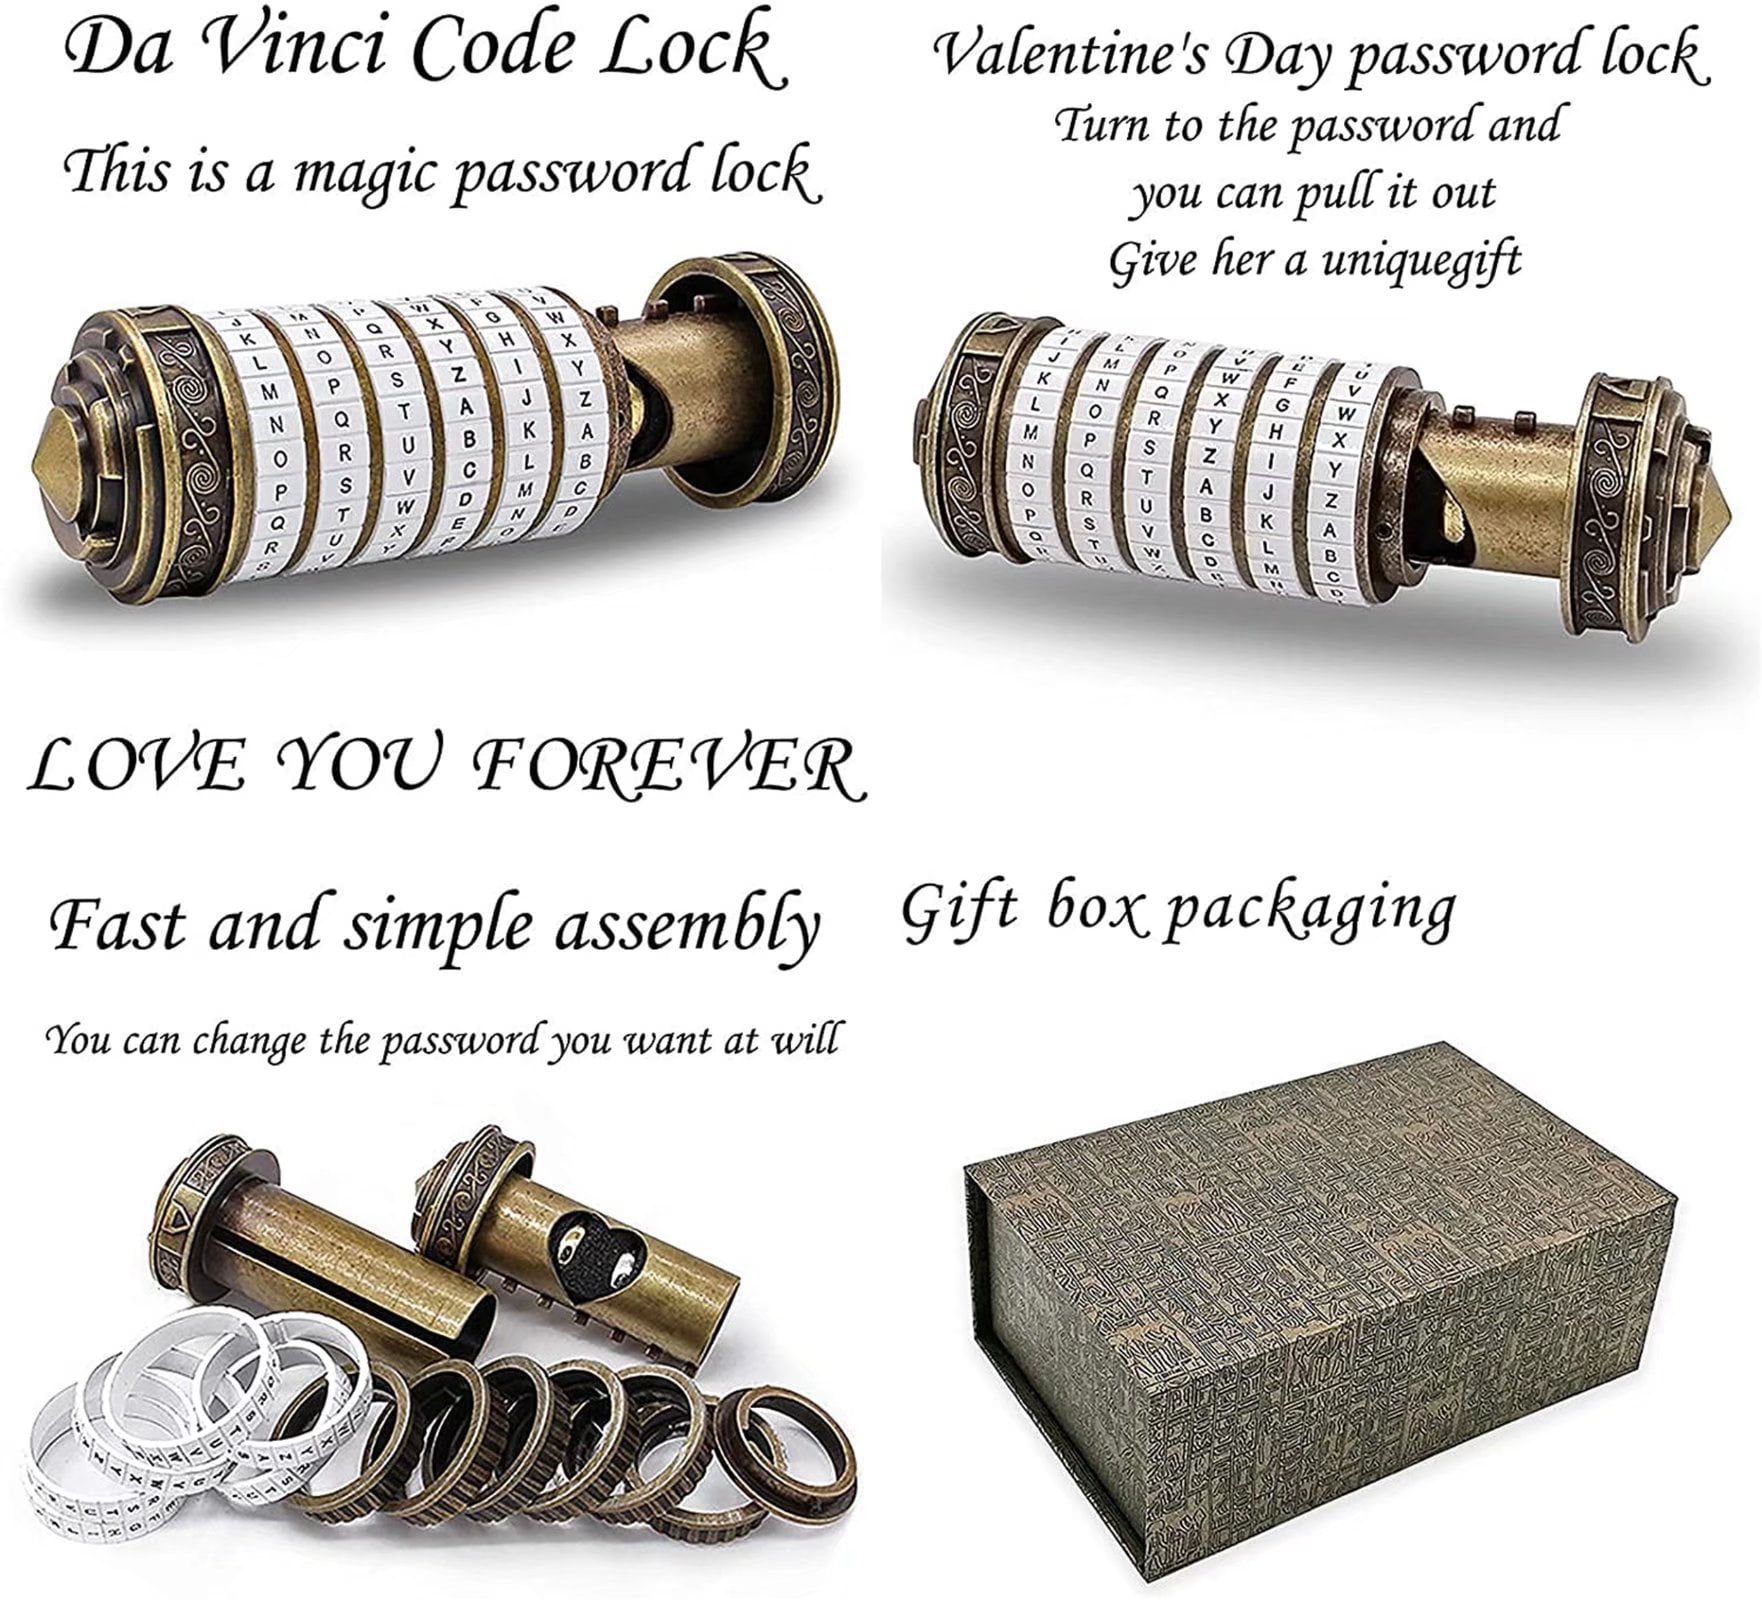 Mini Da Vinci Code Cryptex Lock Revomaze Creative Romantic X2V0 B3D7 Gifts A2V0 